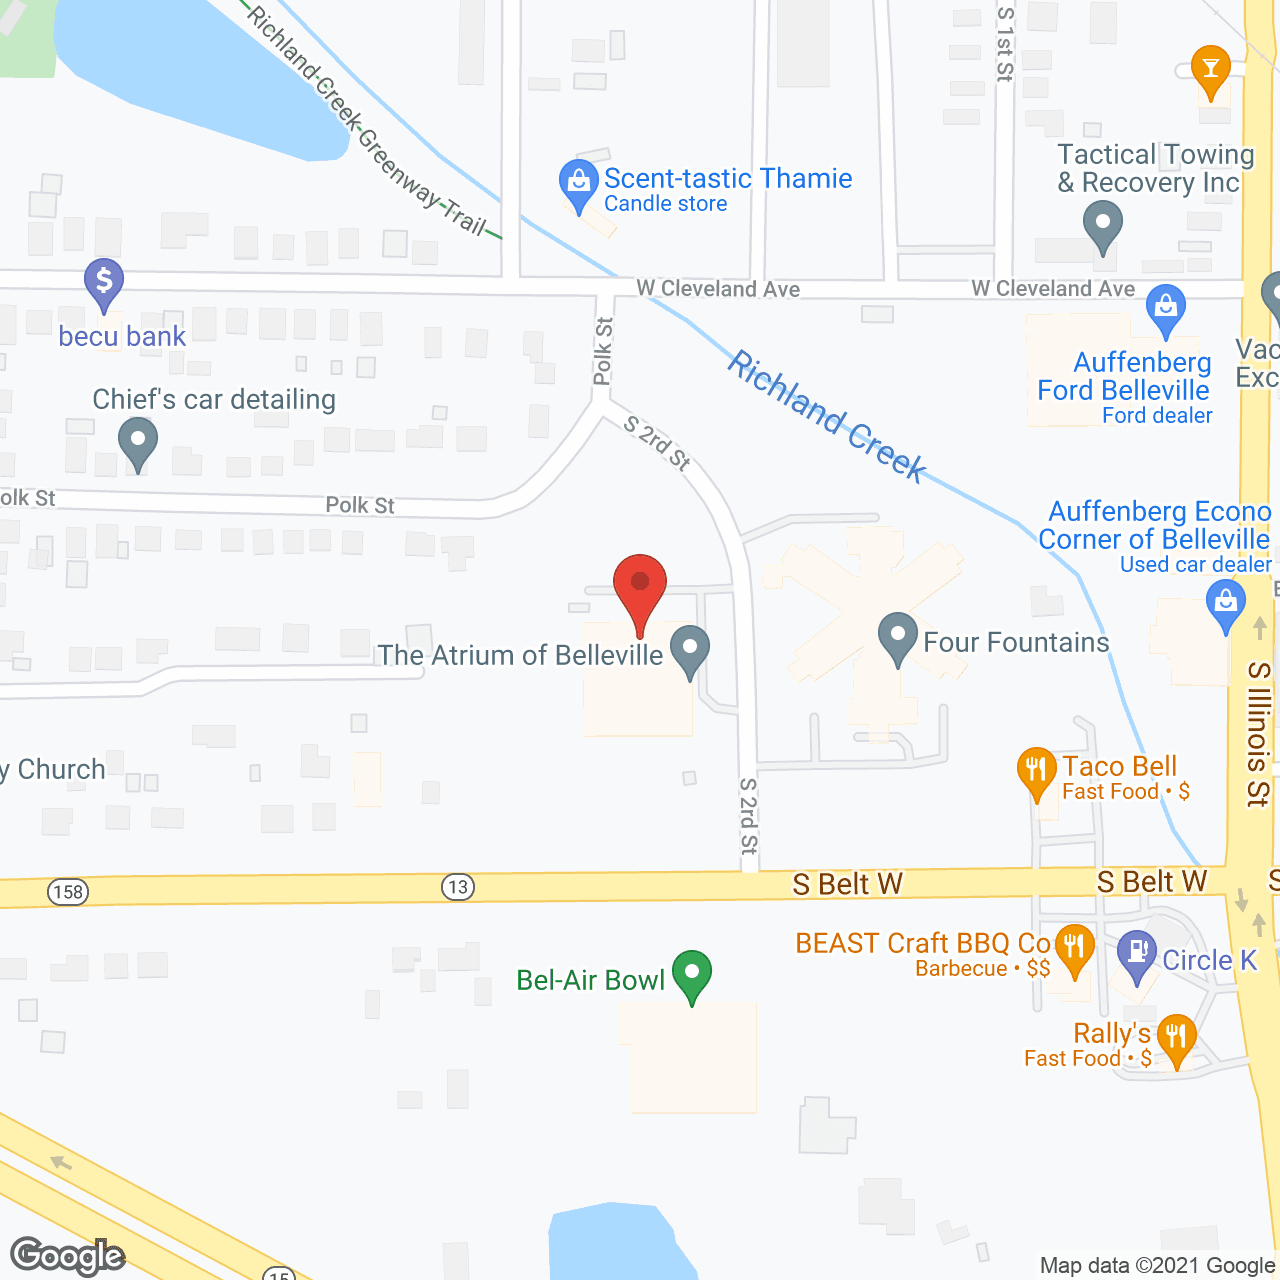 The Atrium of Belleville in google map